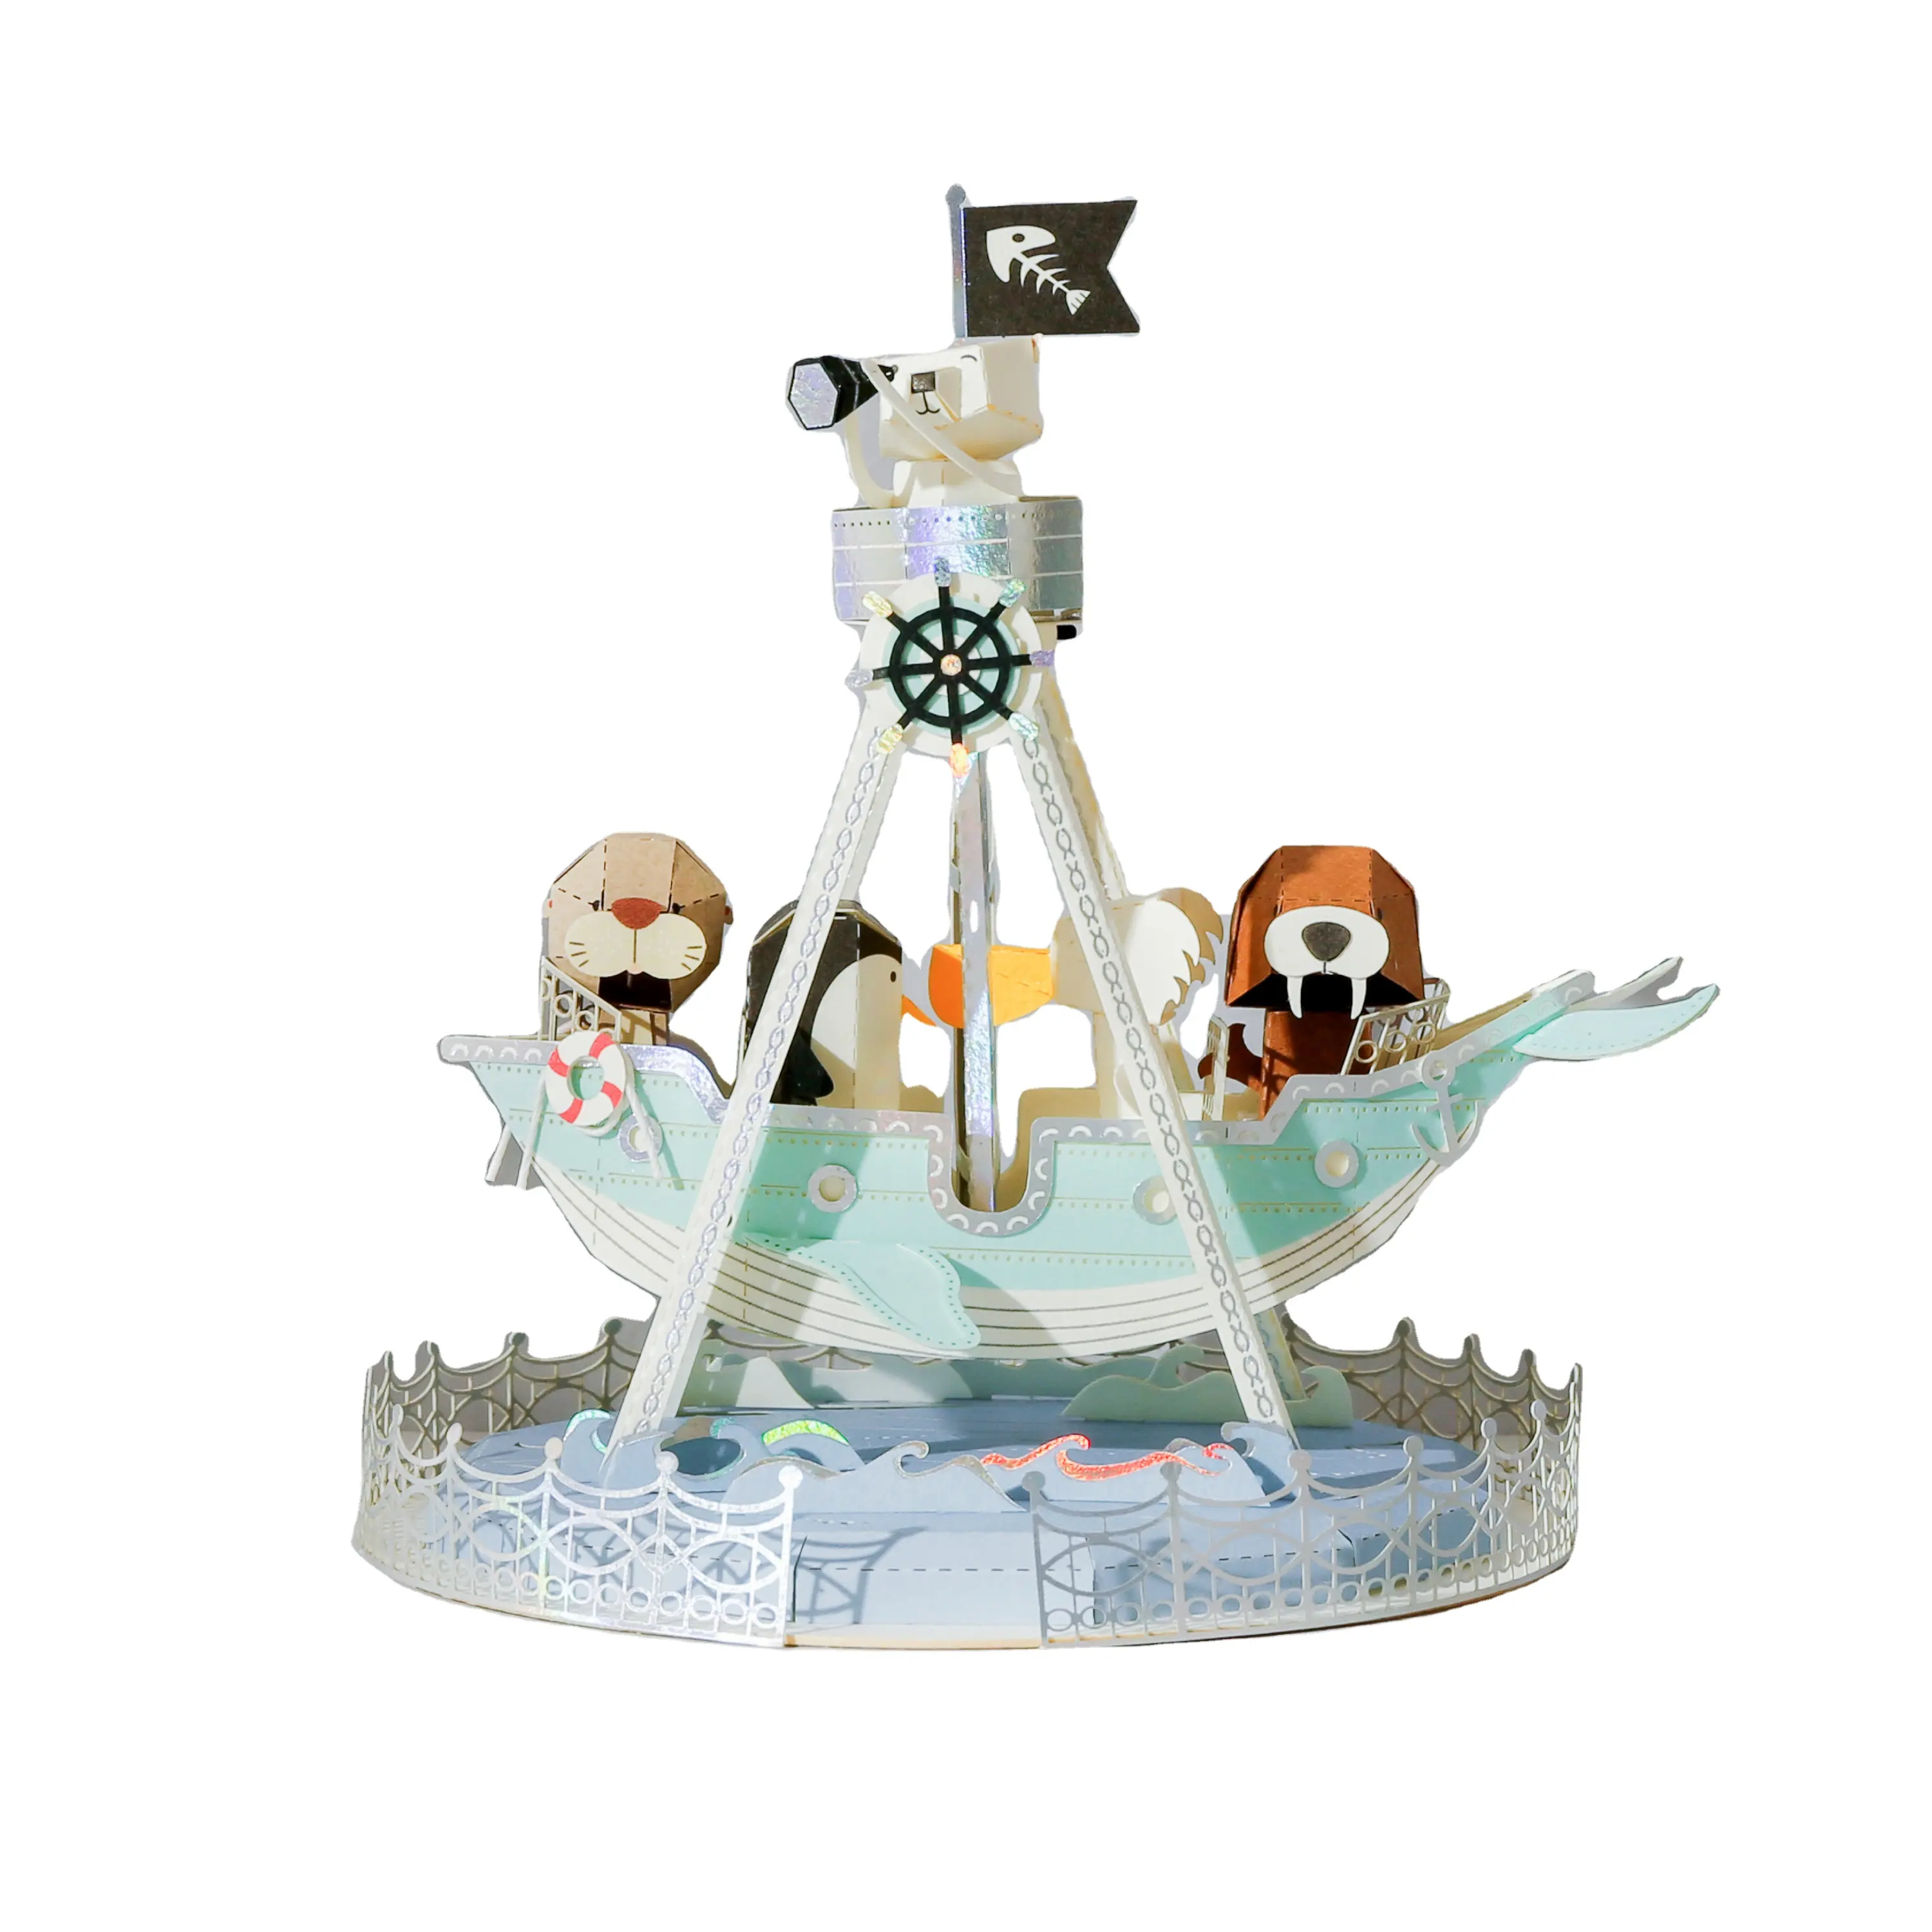 [4A] Exquisite 3D Piraten schiff Miniatur Papier Modell Spielzeug Puppenhaus Spielplatz